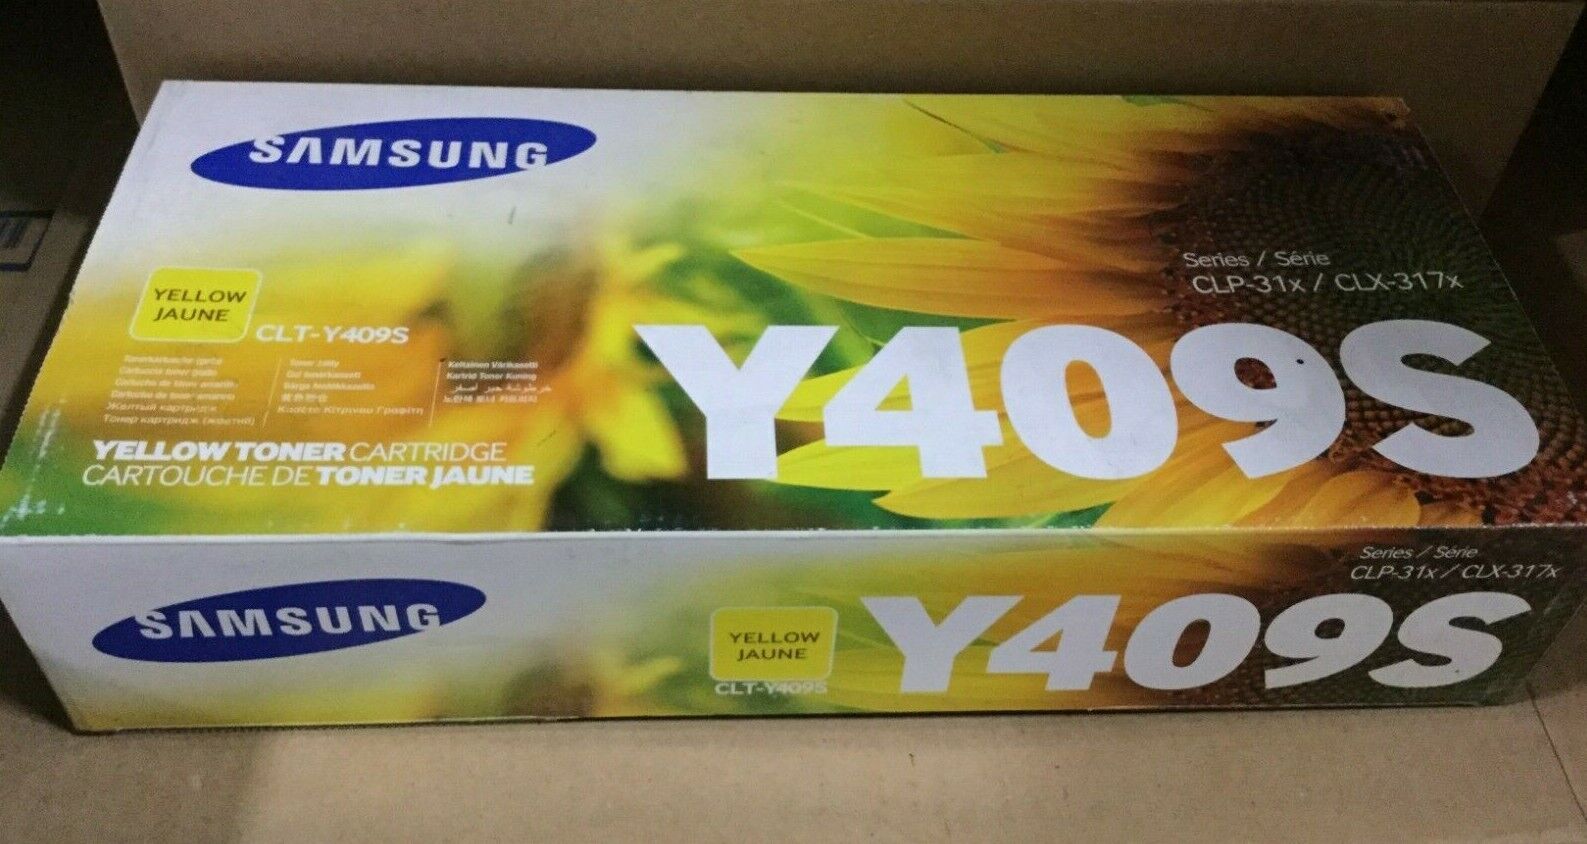 Genuine Samsung CLT-Y409S / CLTY409S Yellow Toner Cartridge for CLP-31x CLX-317x